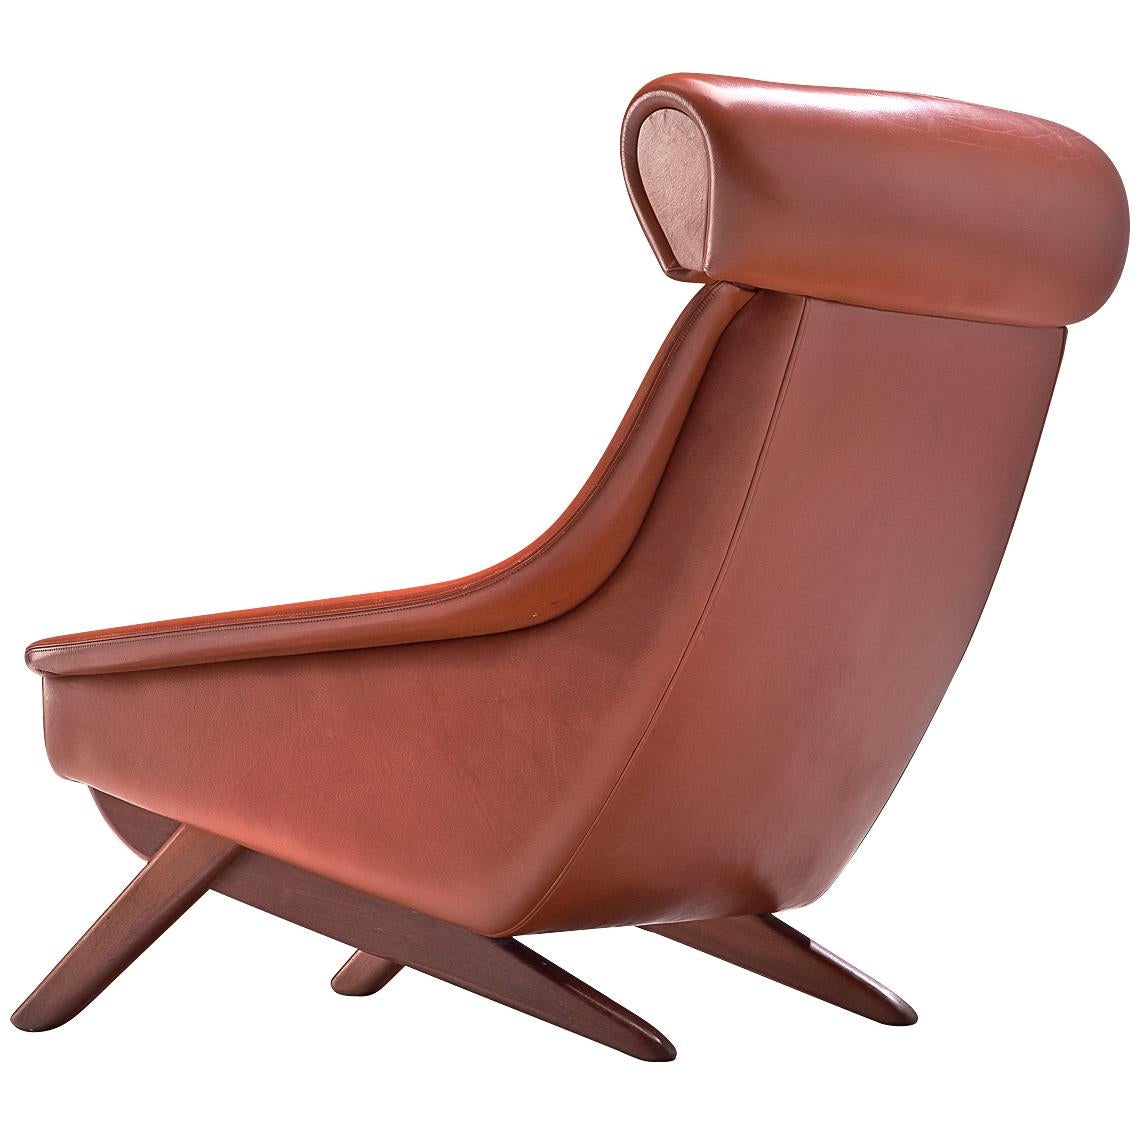 Danish Midcentury Lounge Chair in Terracotta Upholstery